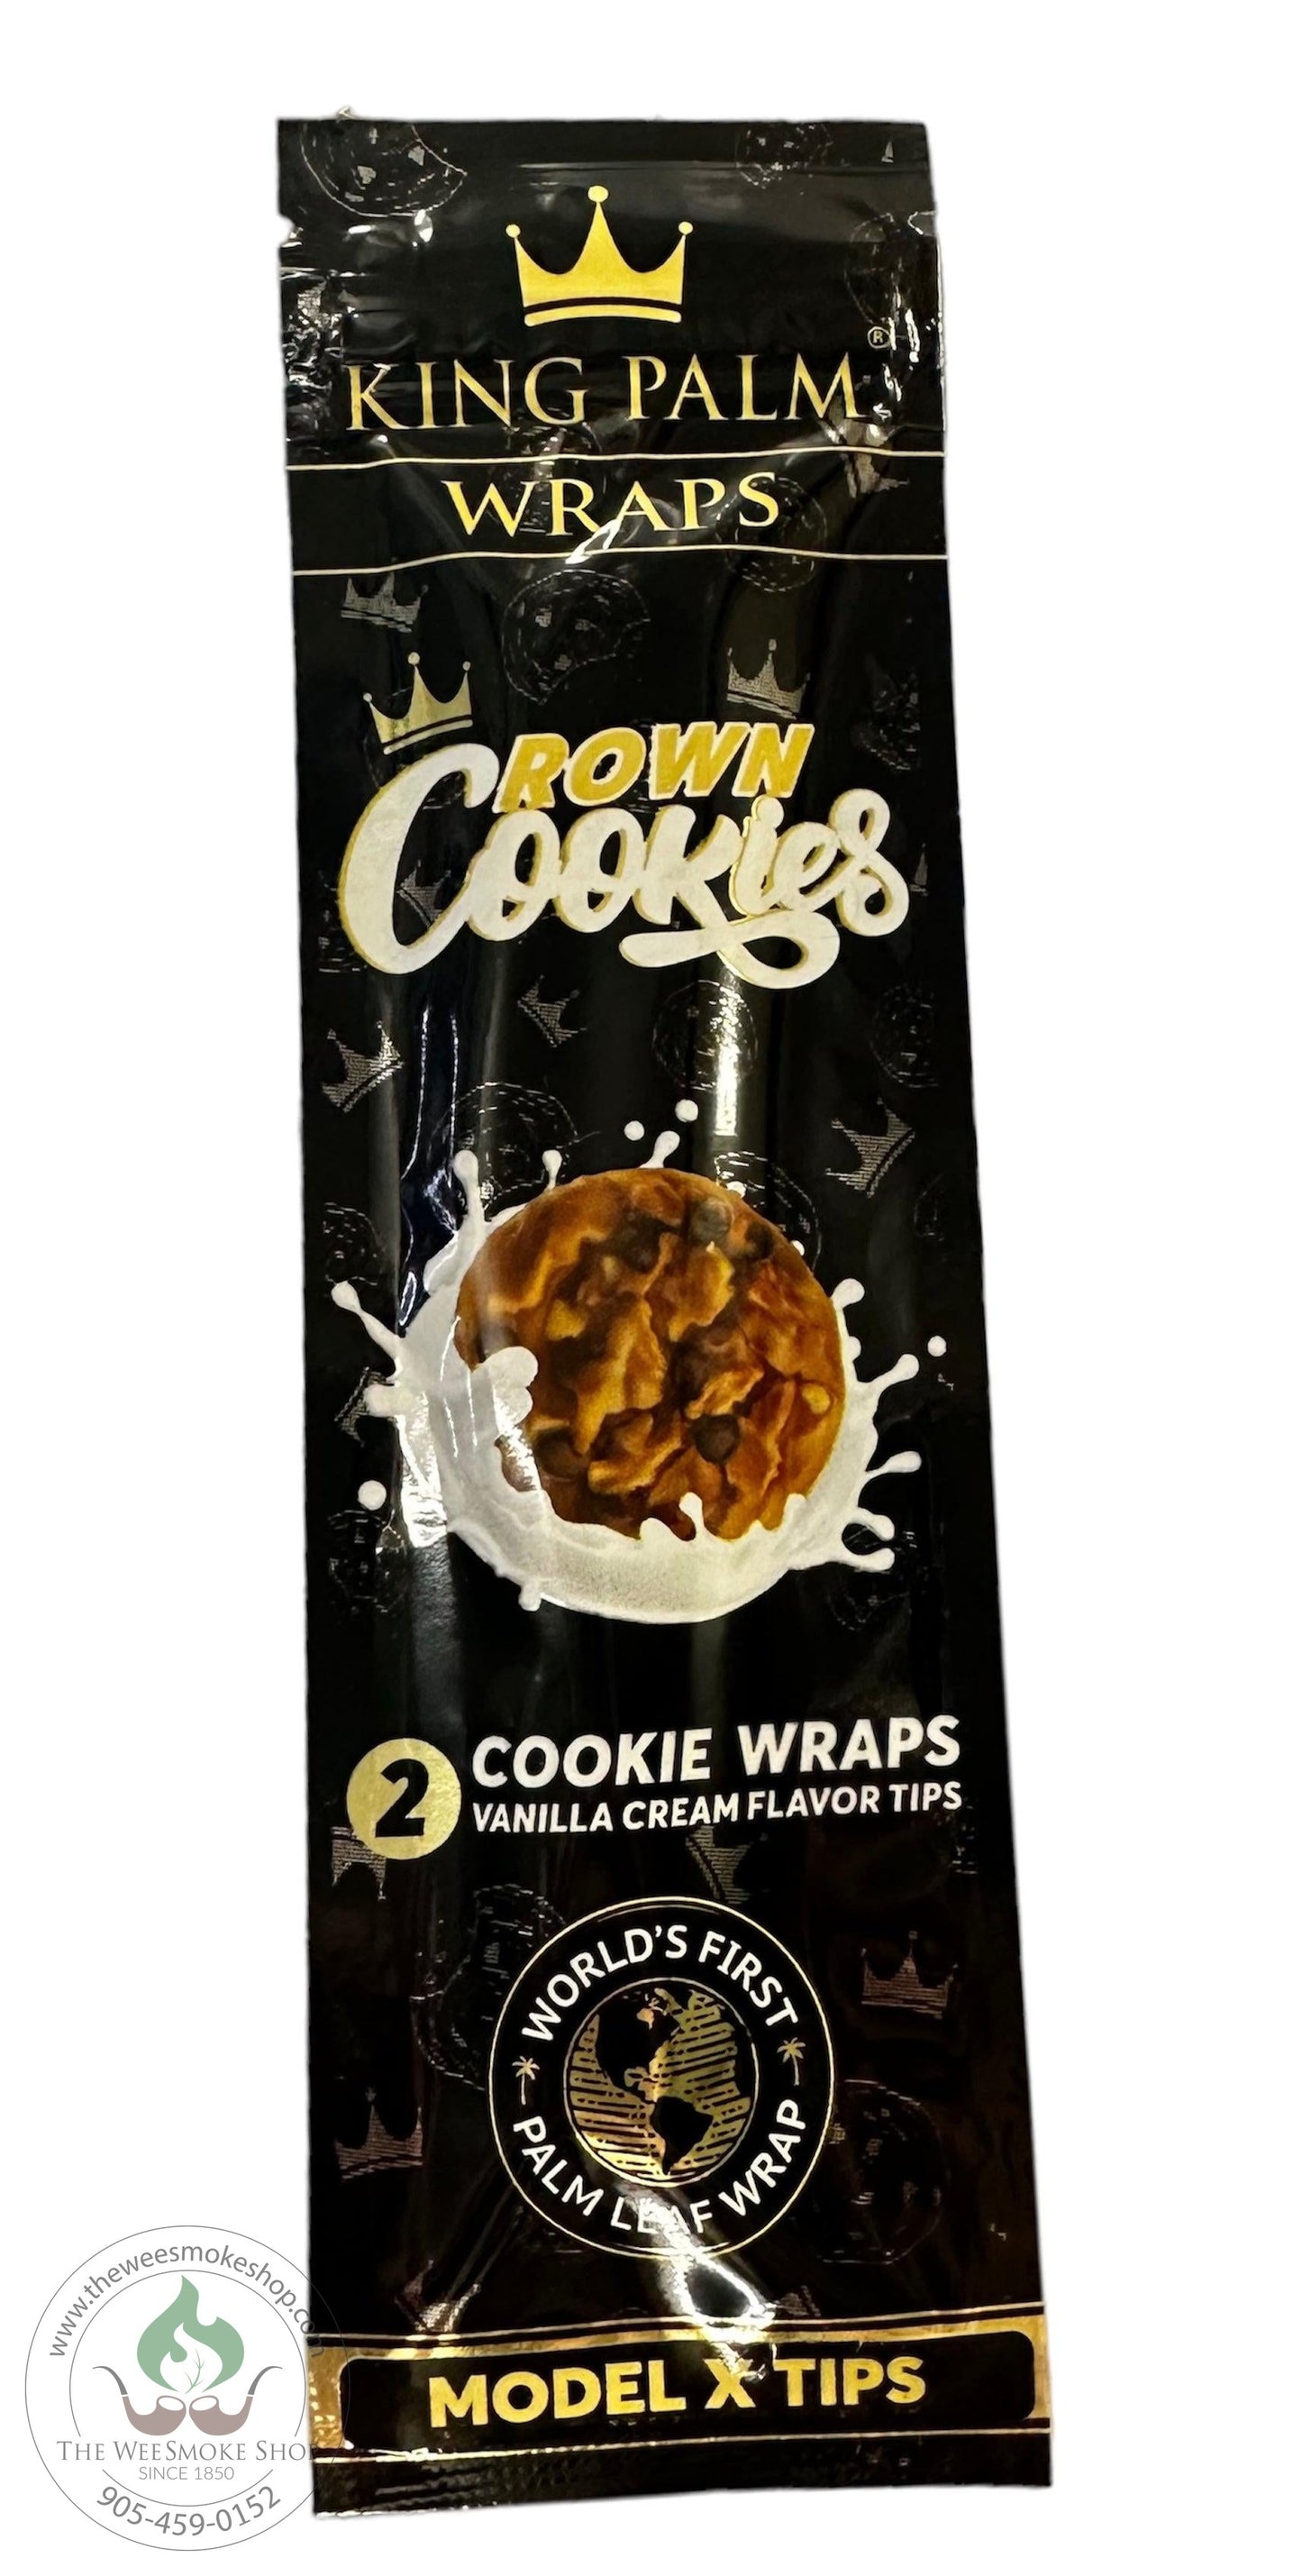 King Palm Crown Cookies XL Wraps - Blunt Wraps - The Wee Smoke Shop